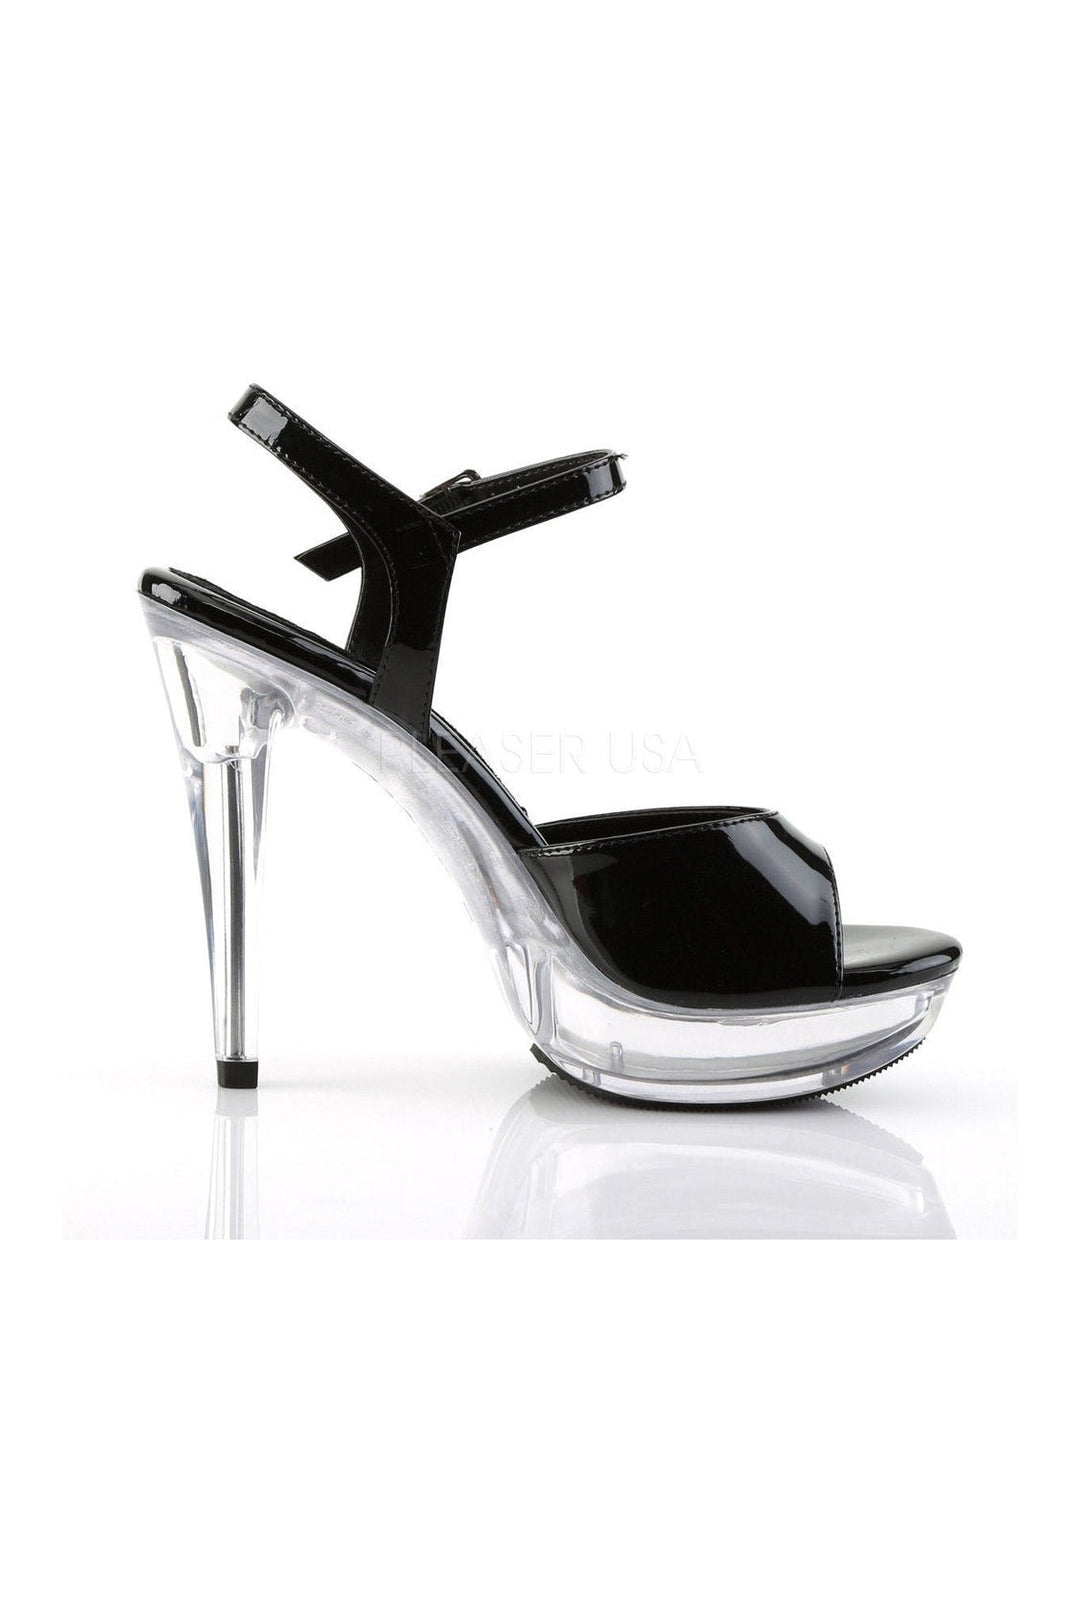 COCKTAIL-509 Sandal | Black Patent-Fabulicious-Sandals-SEXYSHOES.COM